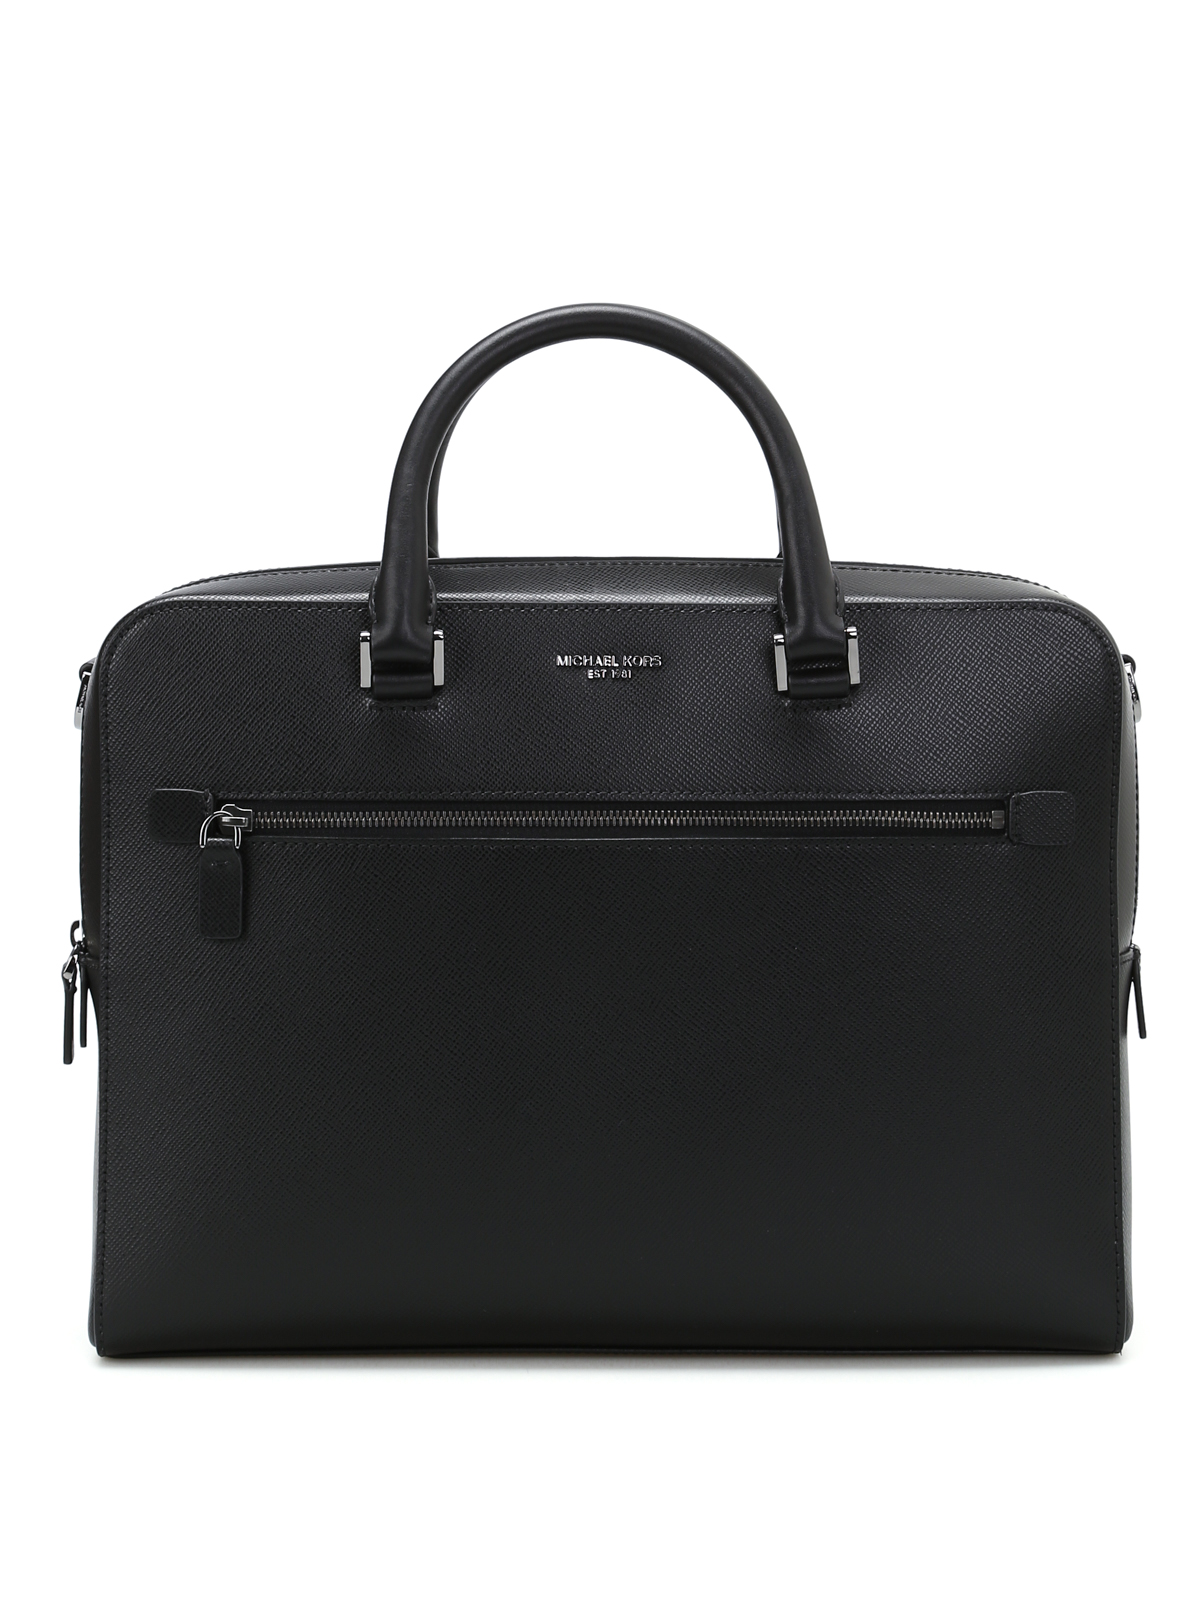 michael kors harrison leather briefcase